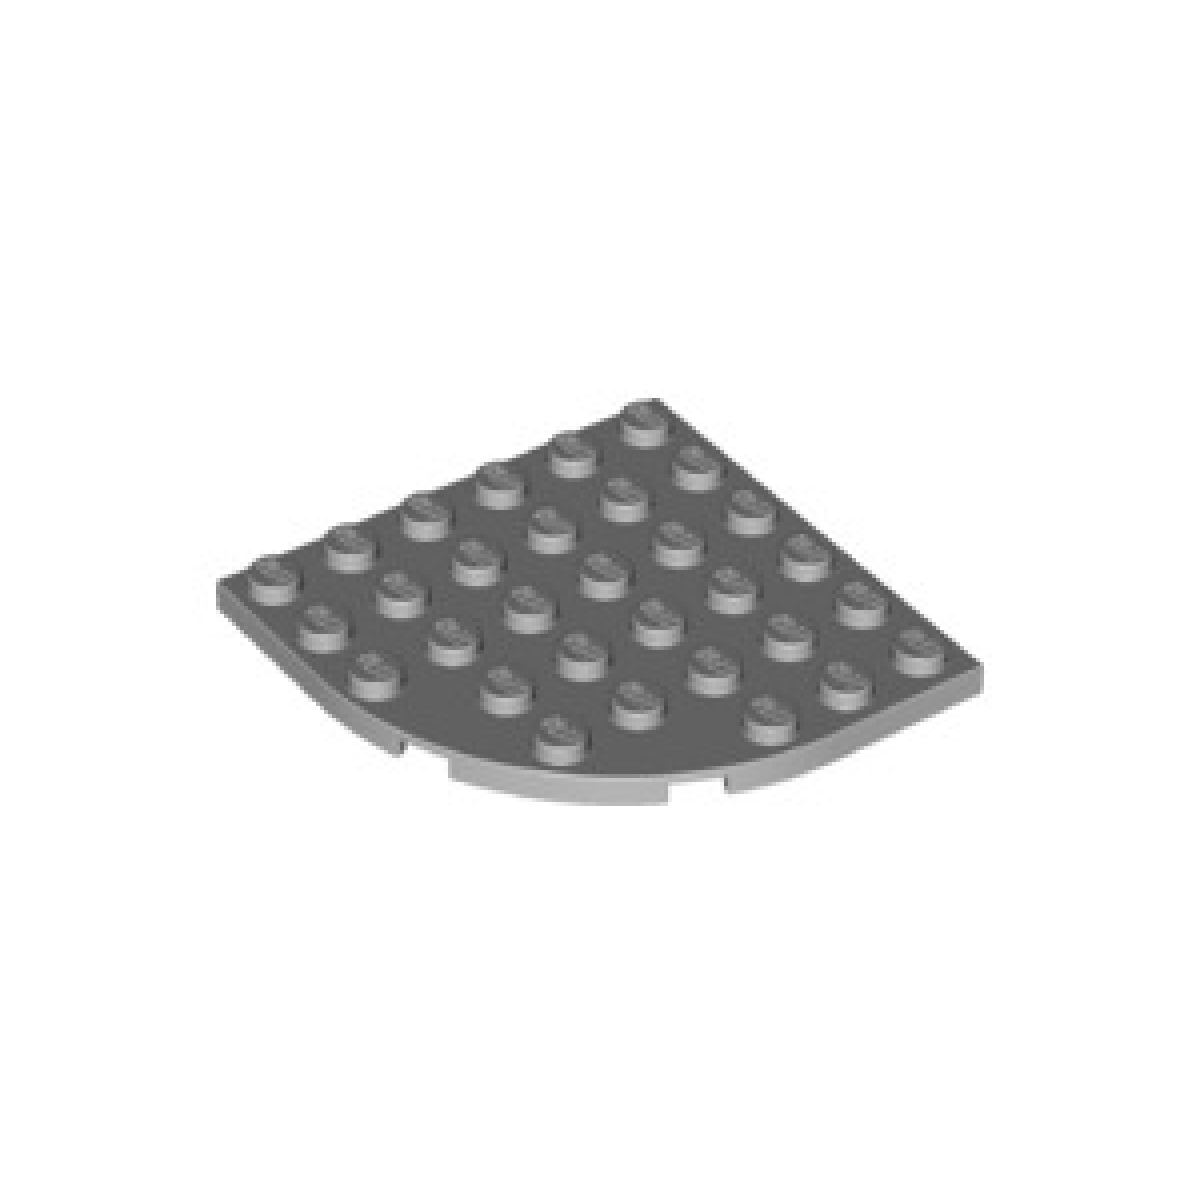 Plates 1/2 Circle - 1/4 Circle LEGO® Plate Round Corner 6x6 - The shop Briques Passion